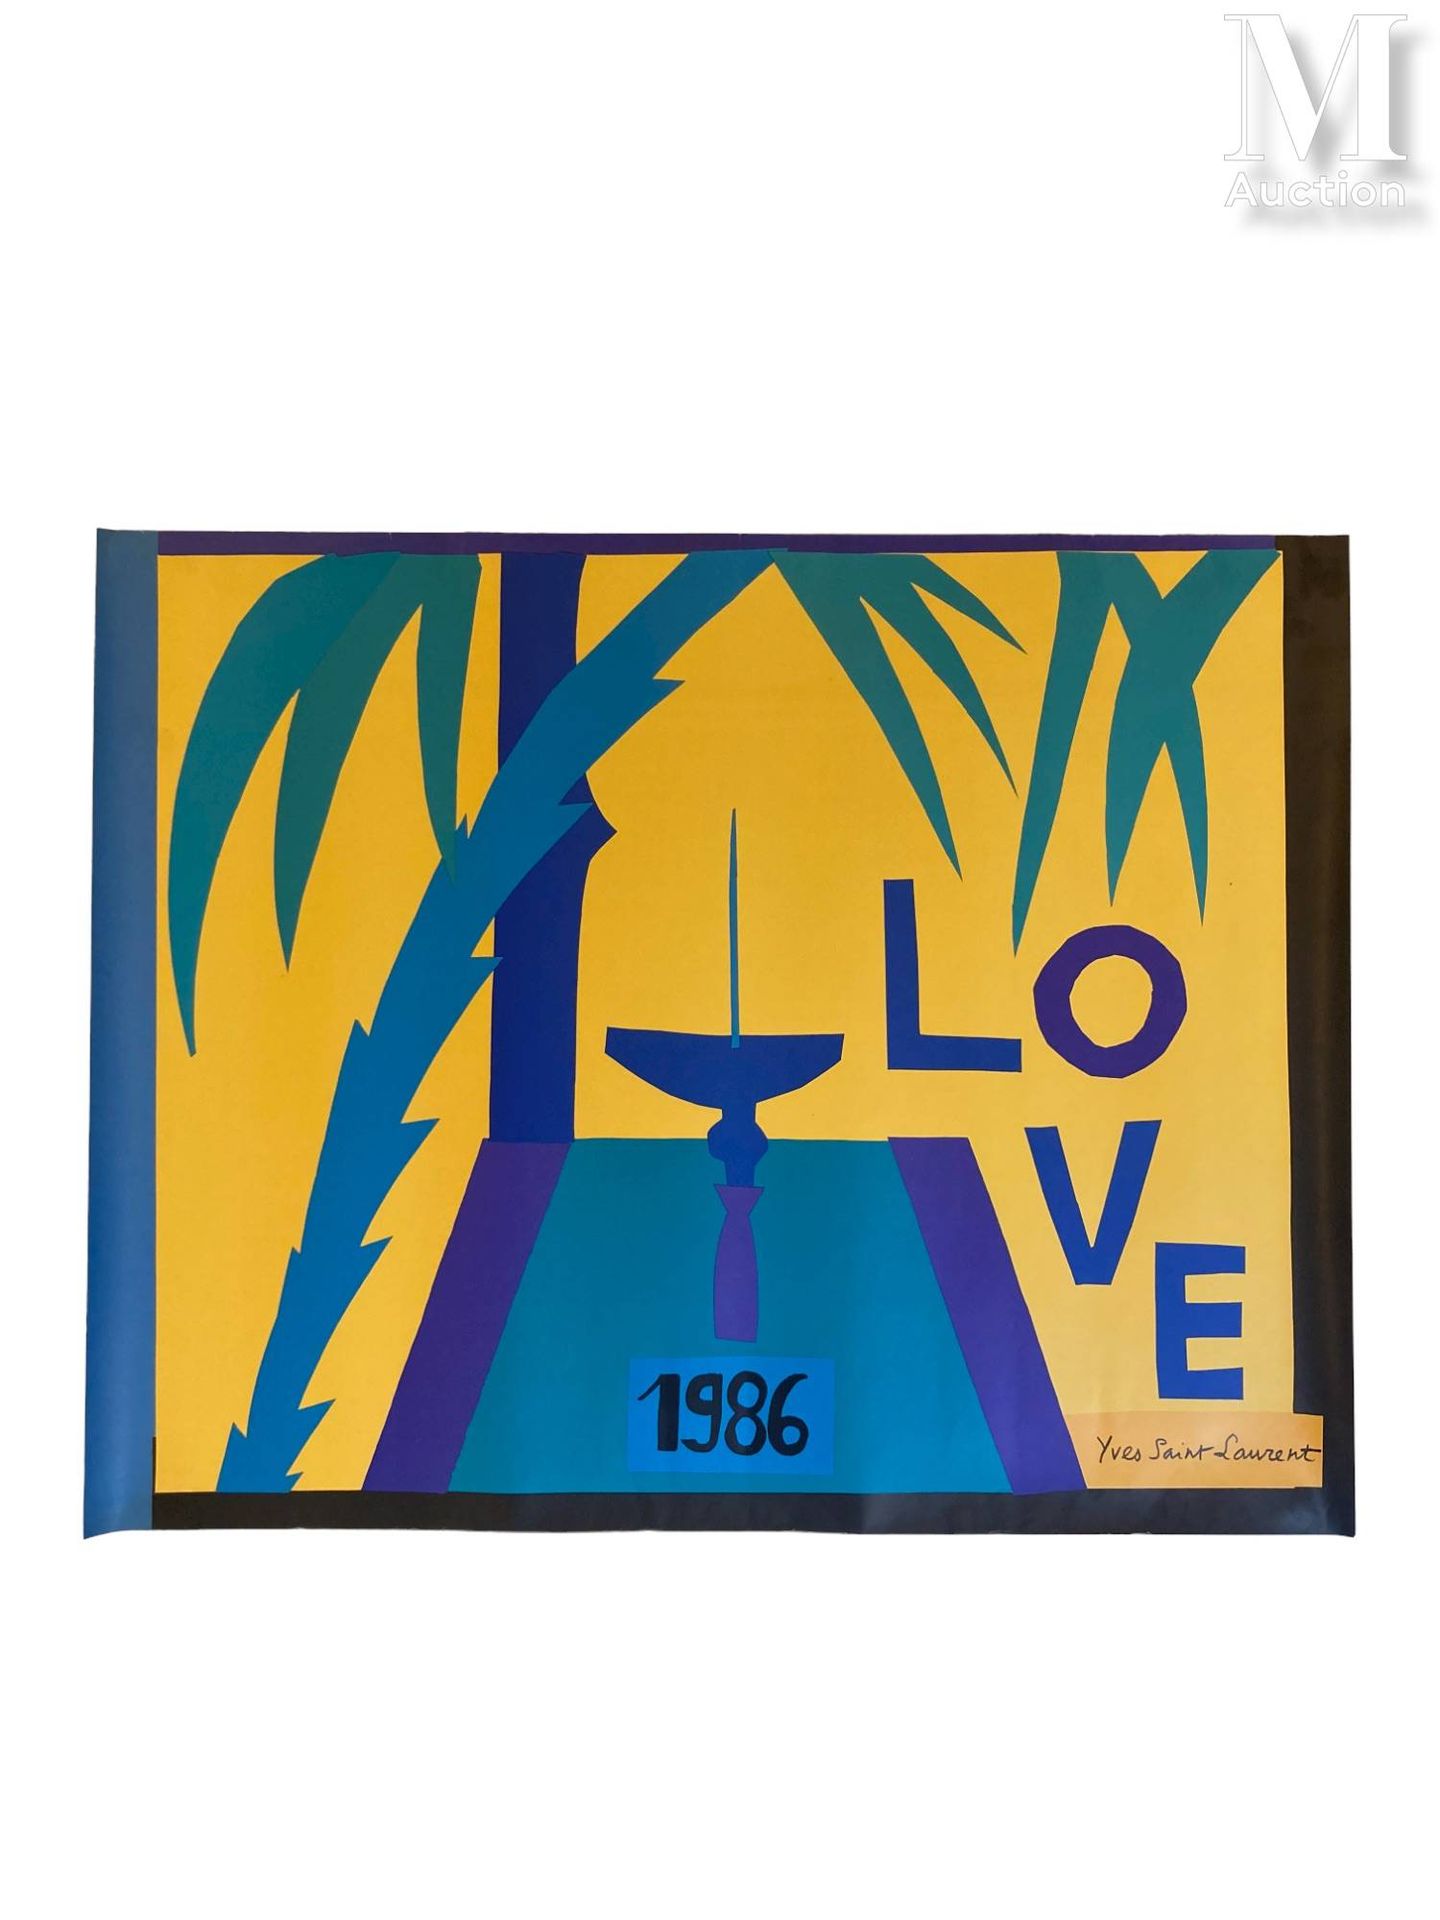 YVES SAINT LAURENT - 1986 Cartel "Amor



impresión en papel 

68 x 54 cm